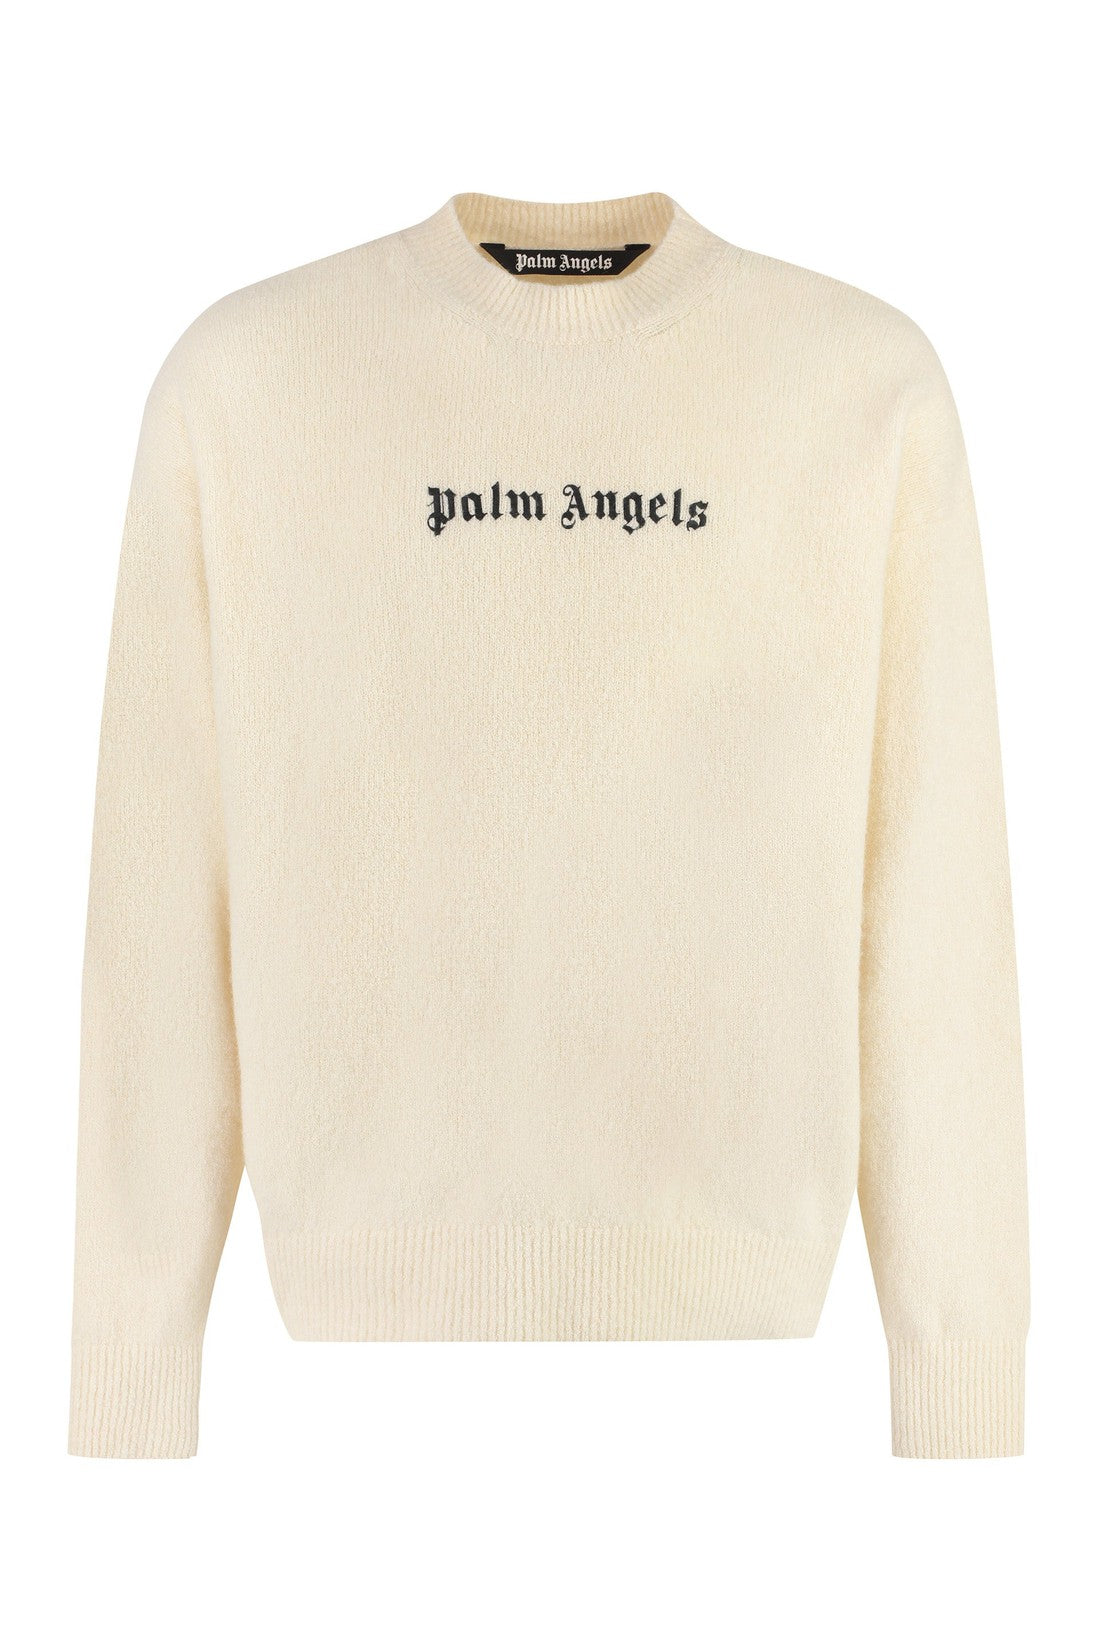 Palm Angels-OUTLET-SALE-Logo crew-neck sweater-ARCHIVIST